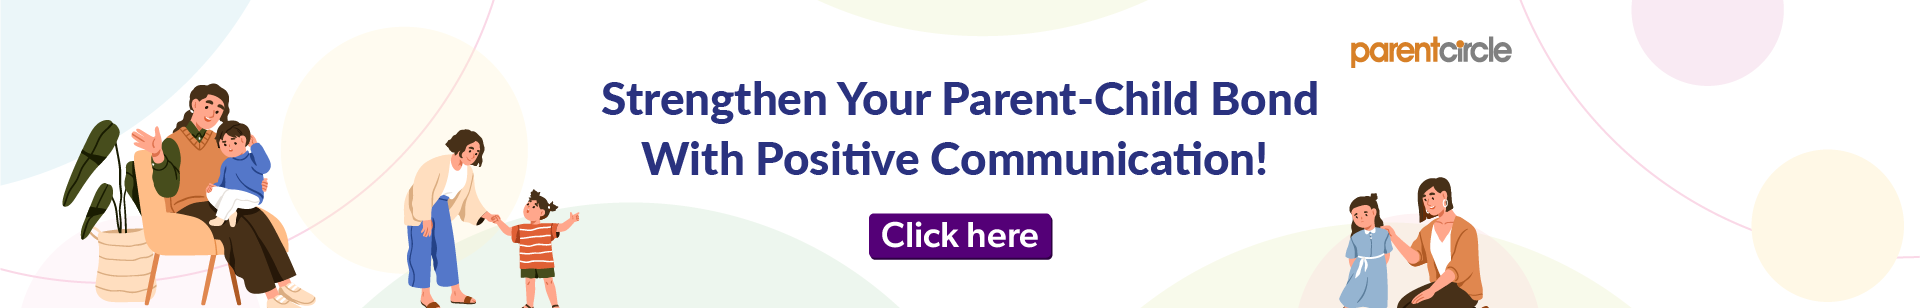 Strengthen Your Parent-Child Bond With Positive Communication!